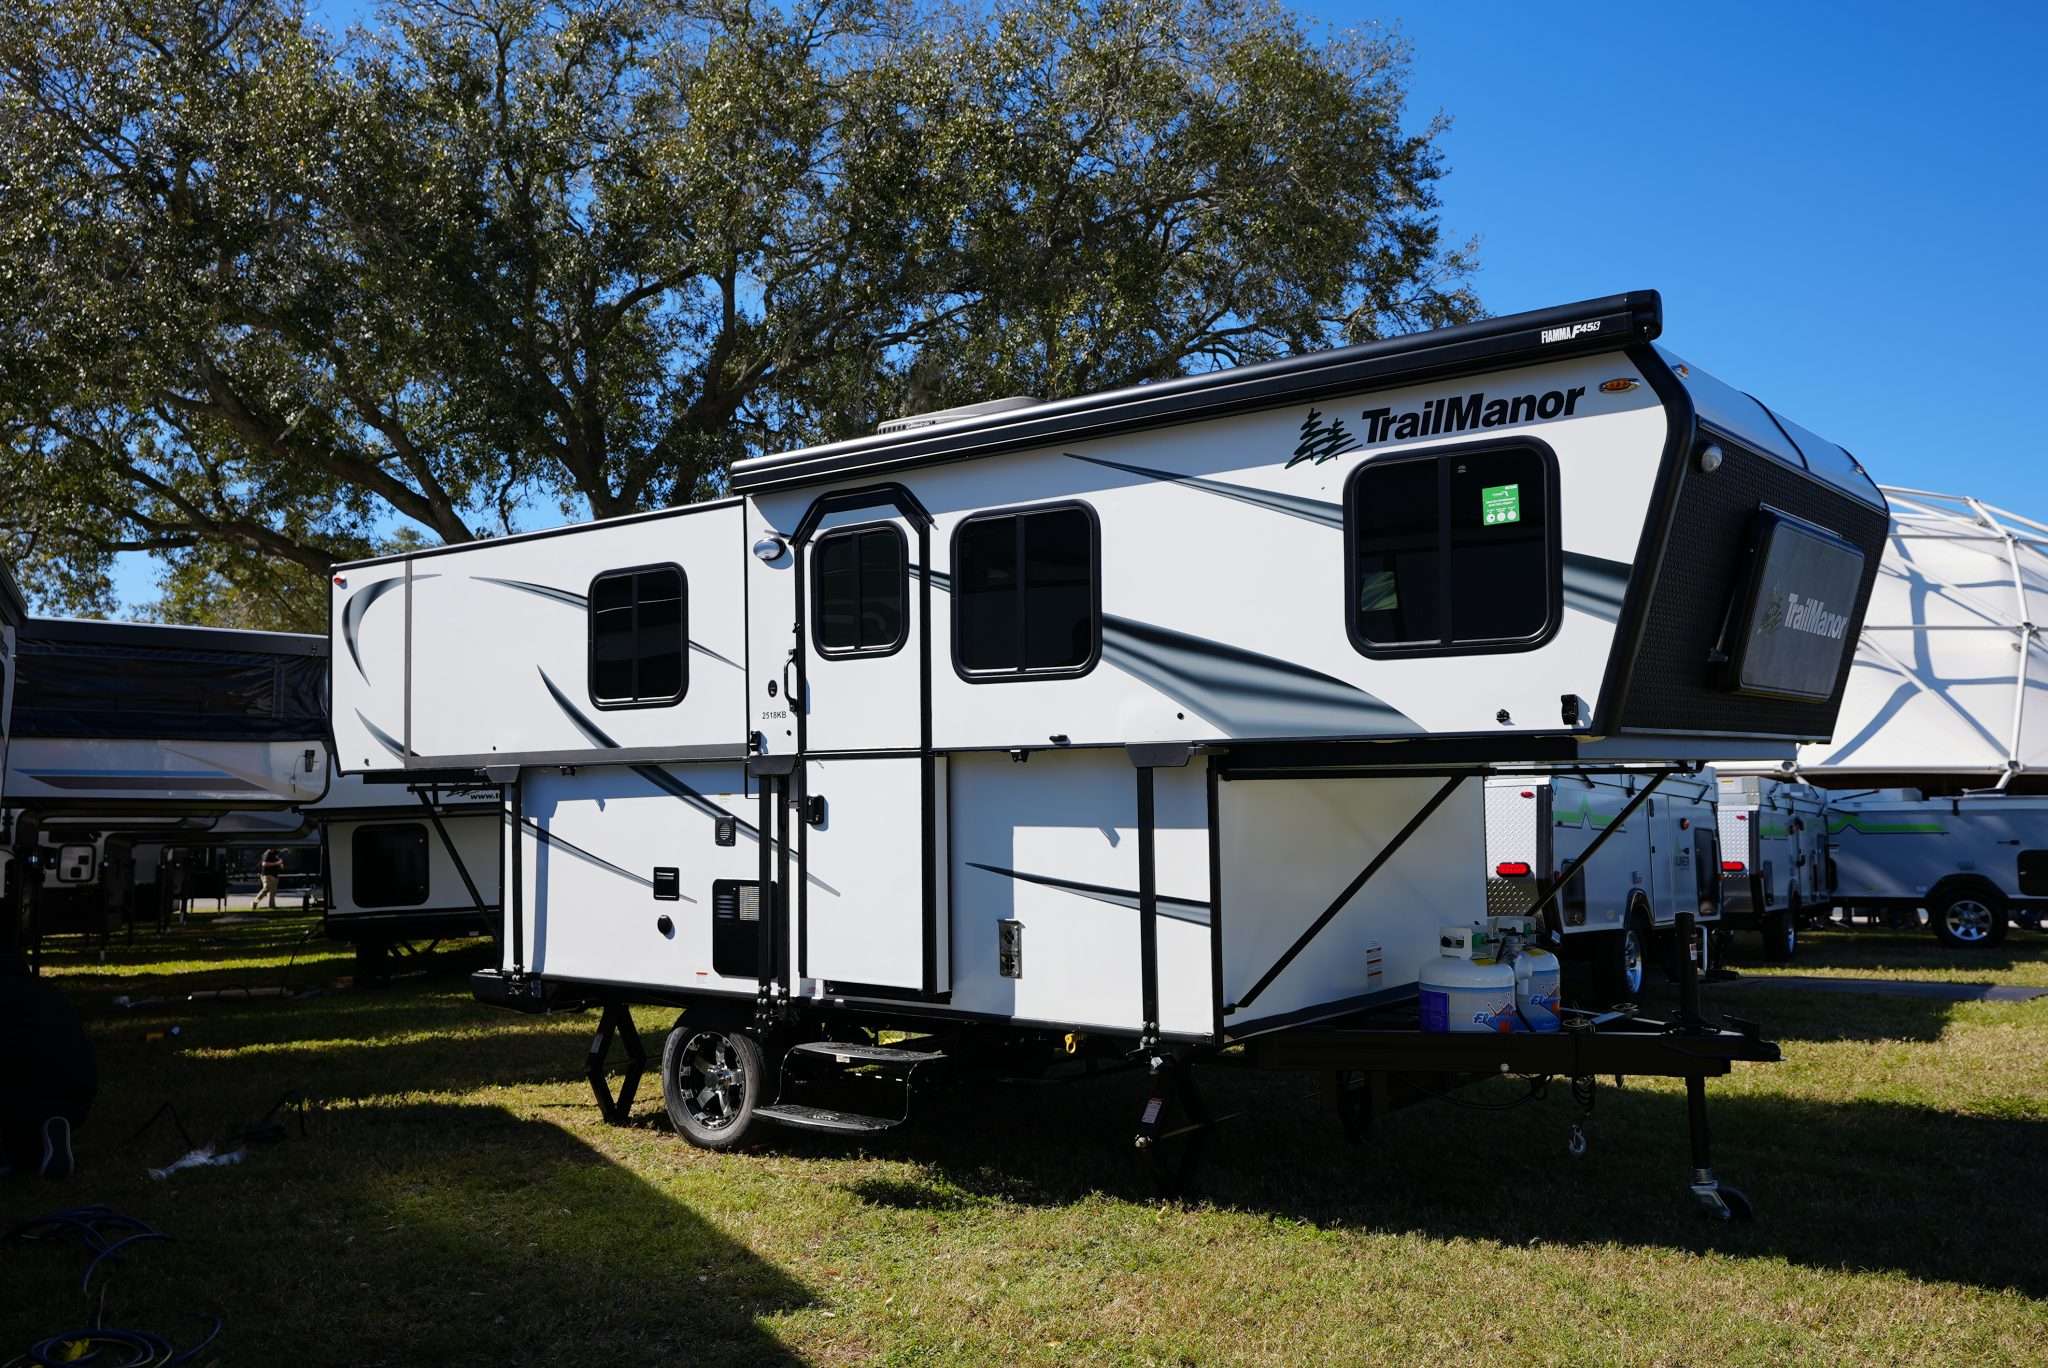 Opened TrailManor pop-up camper